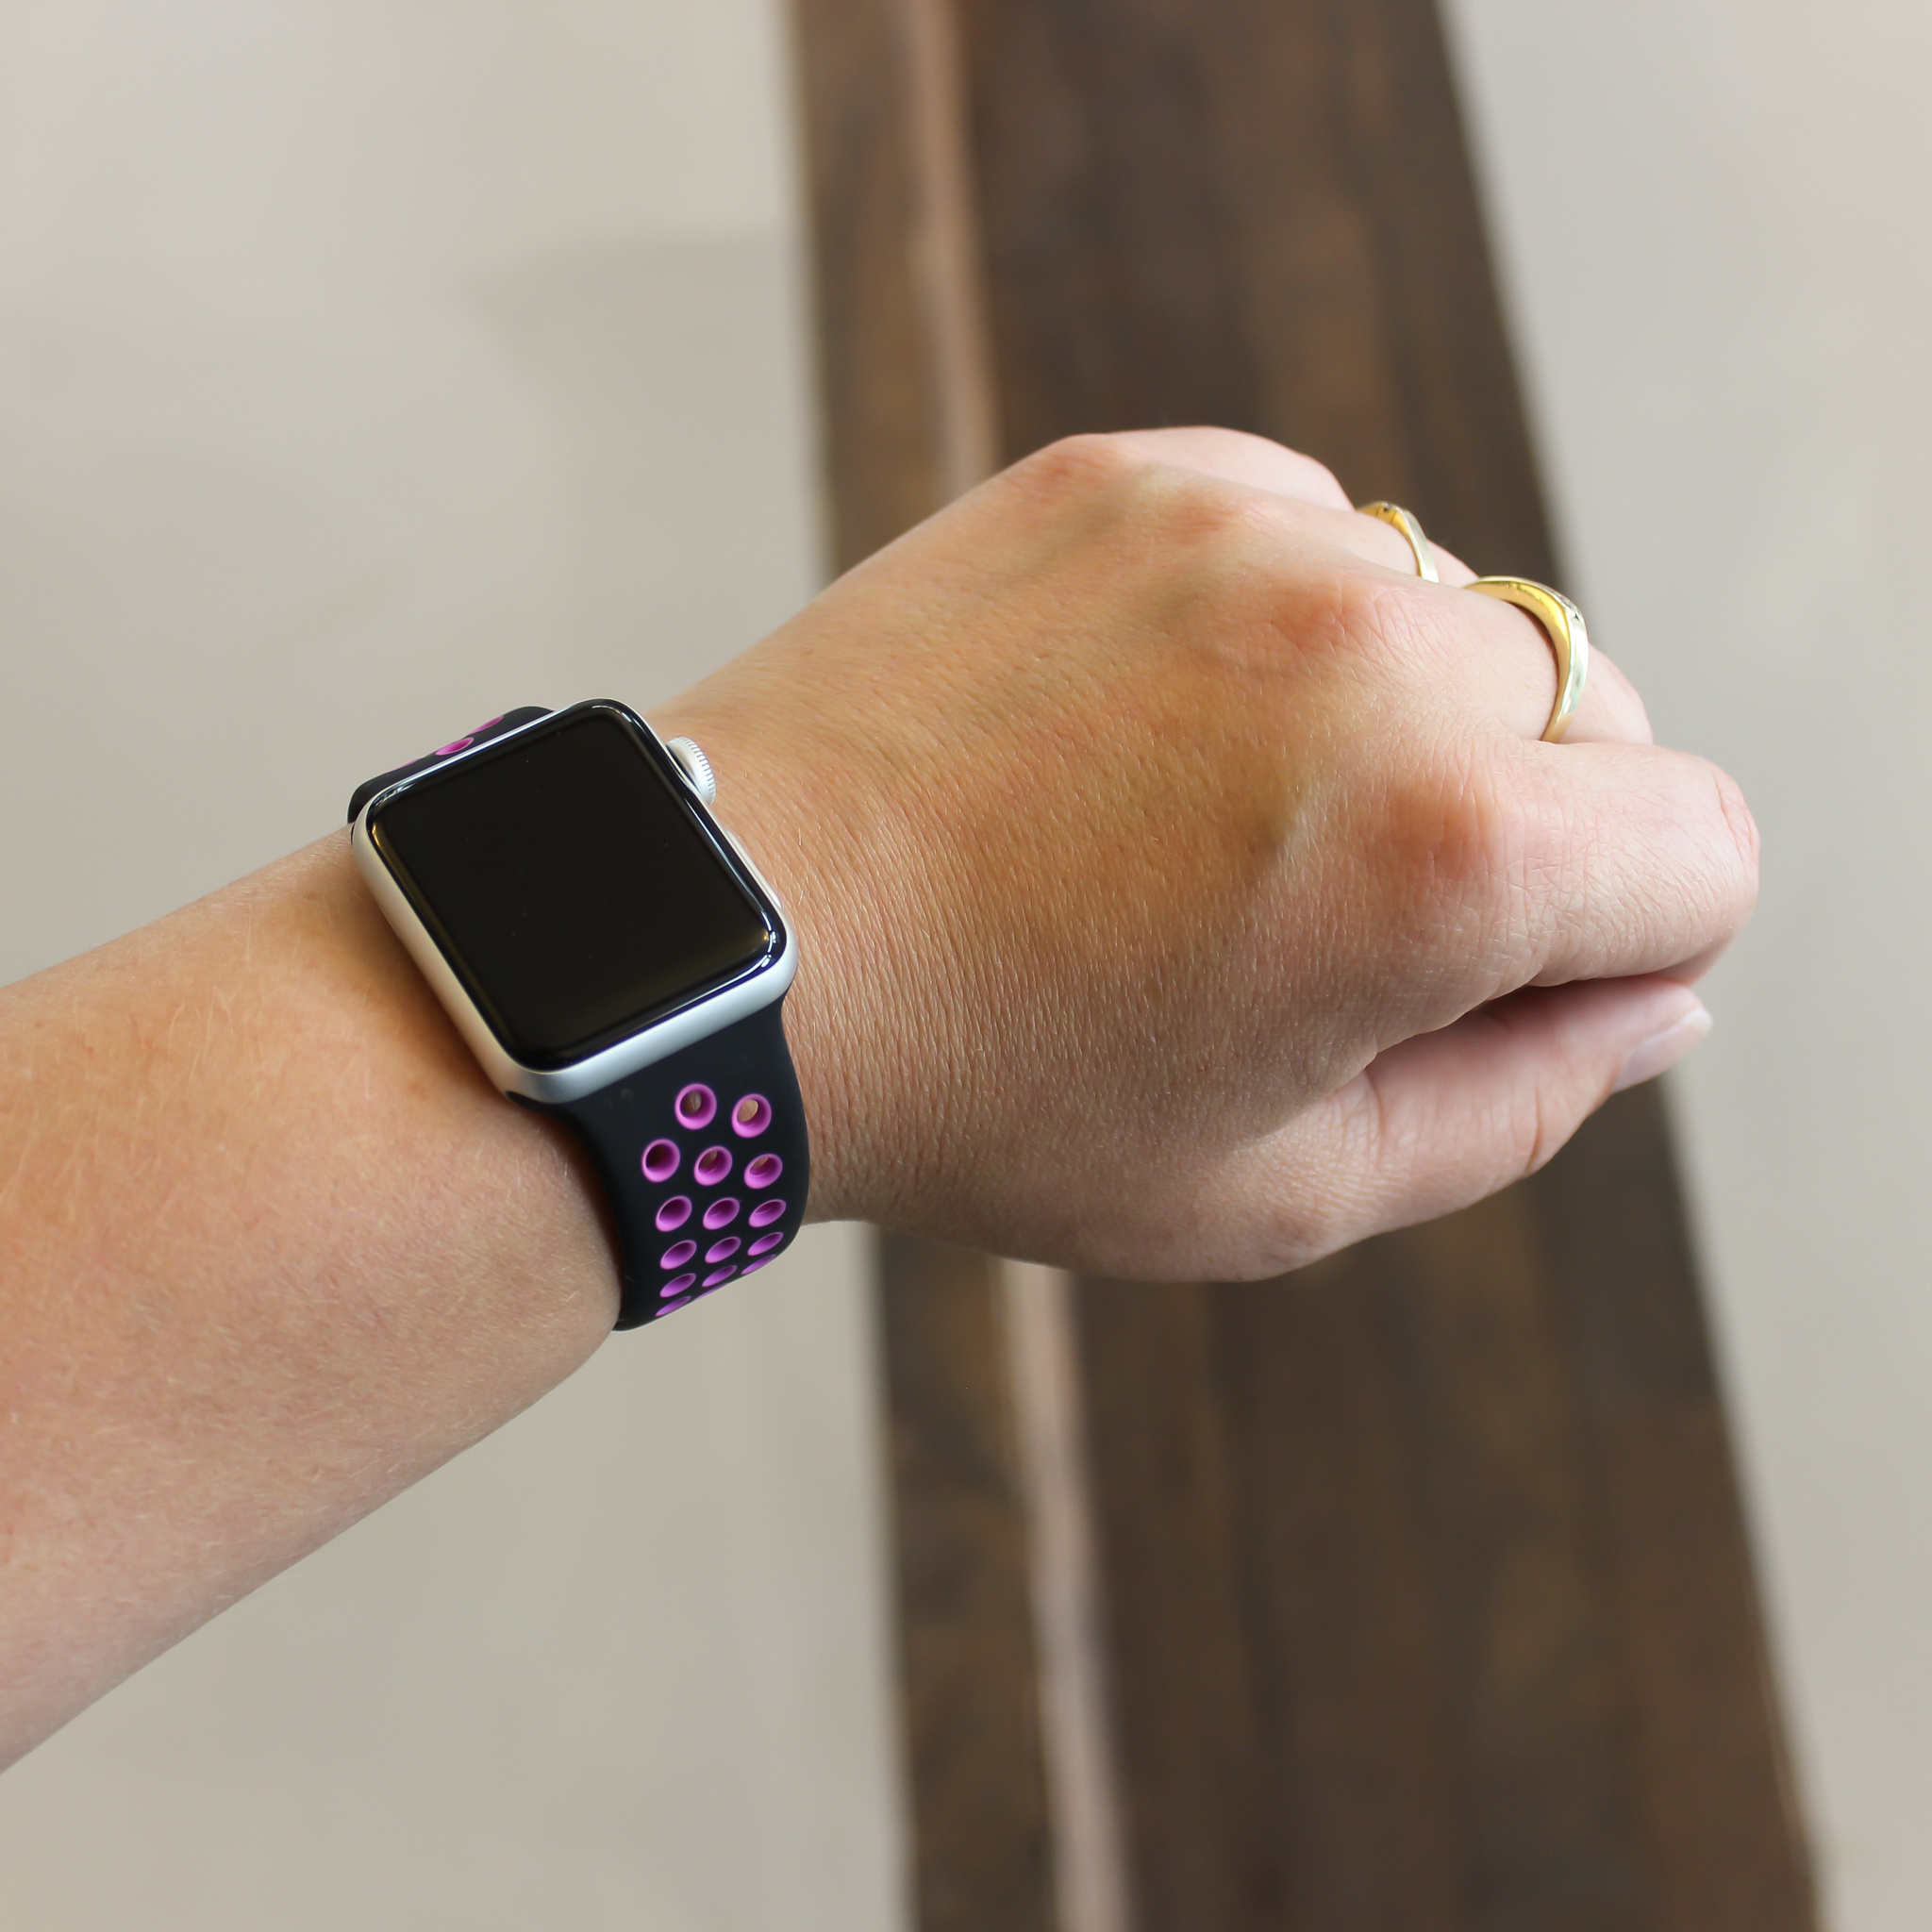  Apple Watch dupla sport szalag - fekete lila